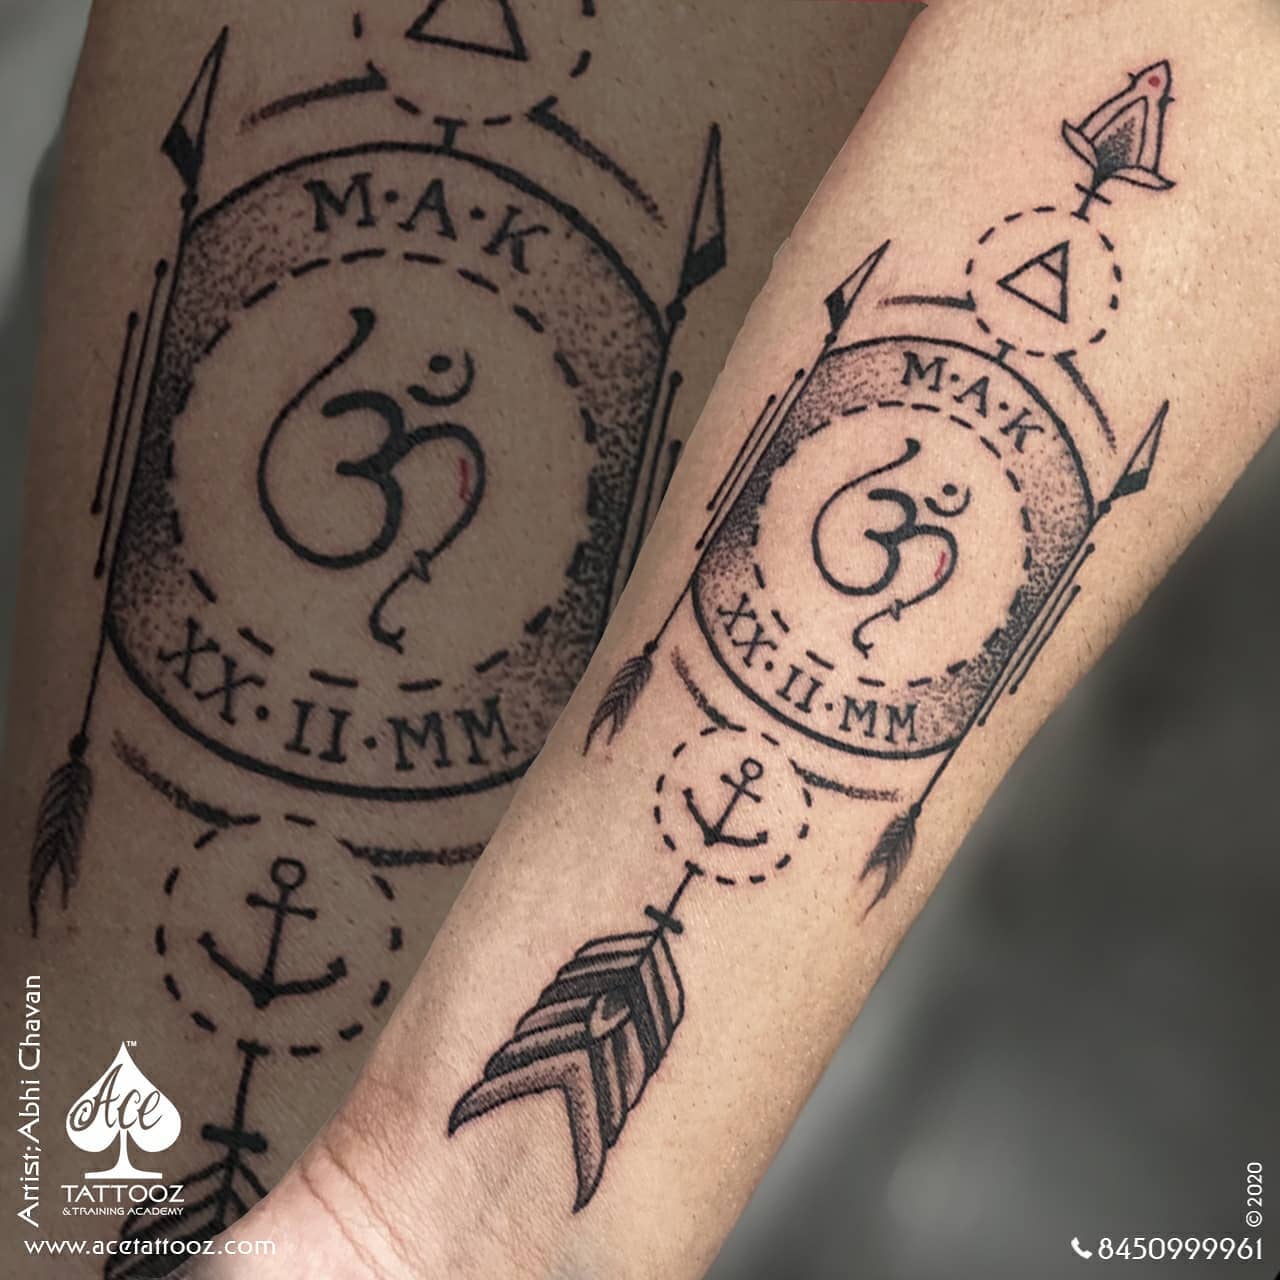 Soulful Ink: Explore Spiritual Tattoos at Ace Tattooz